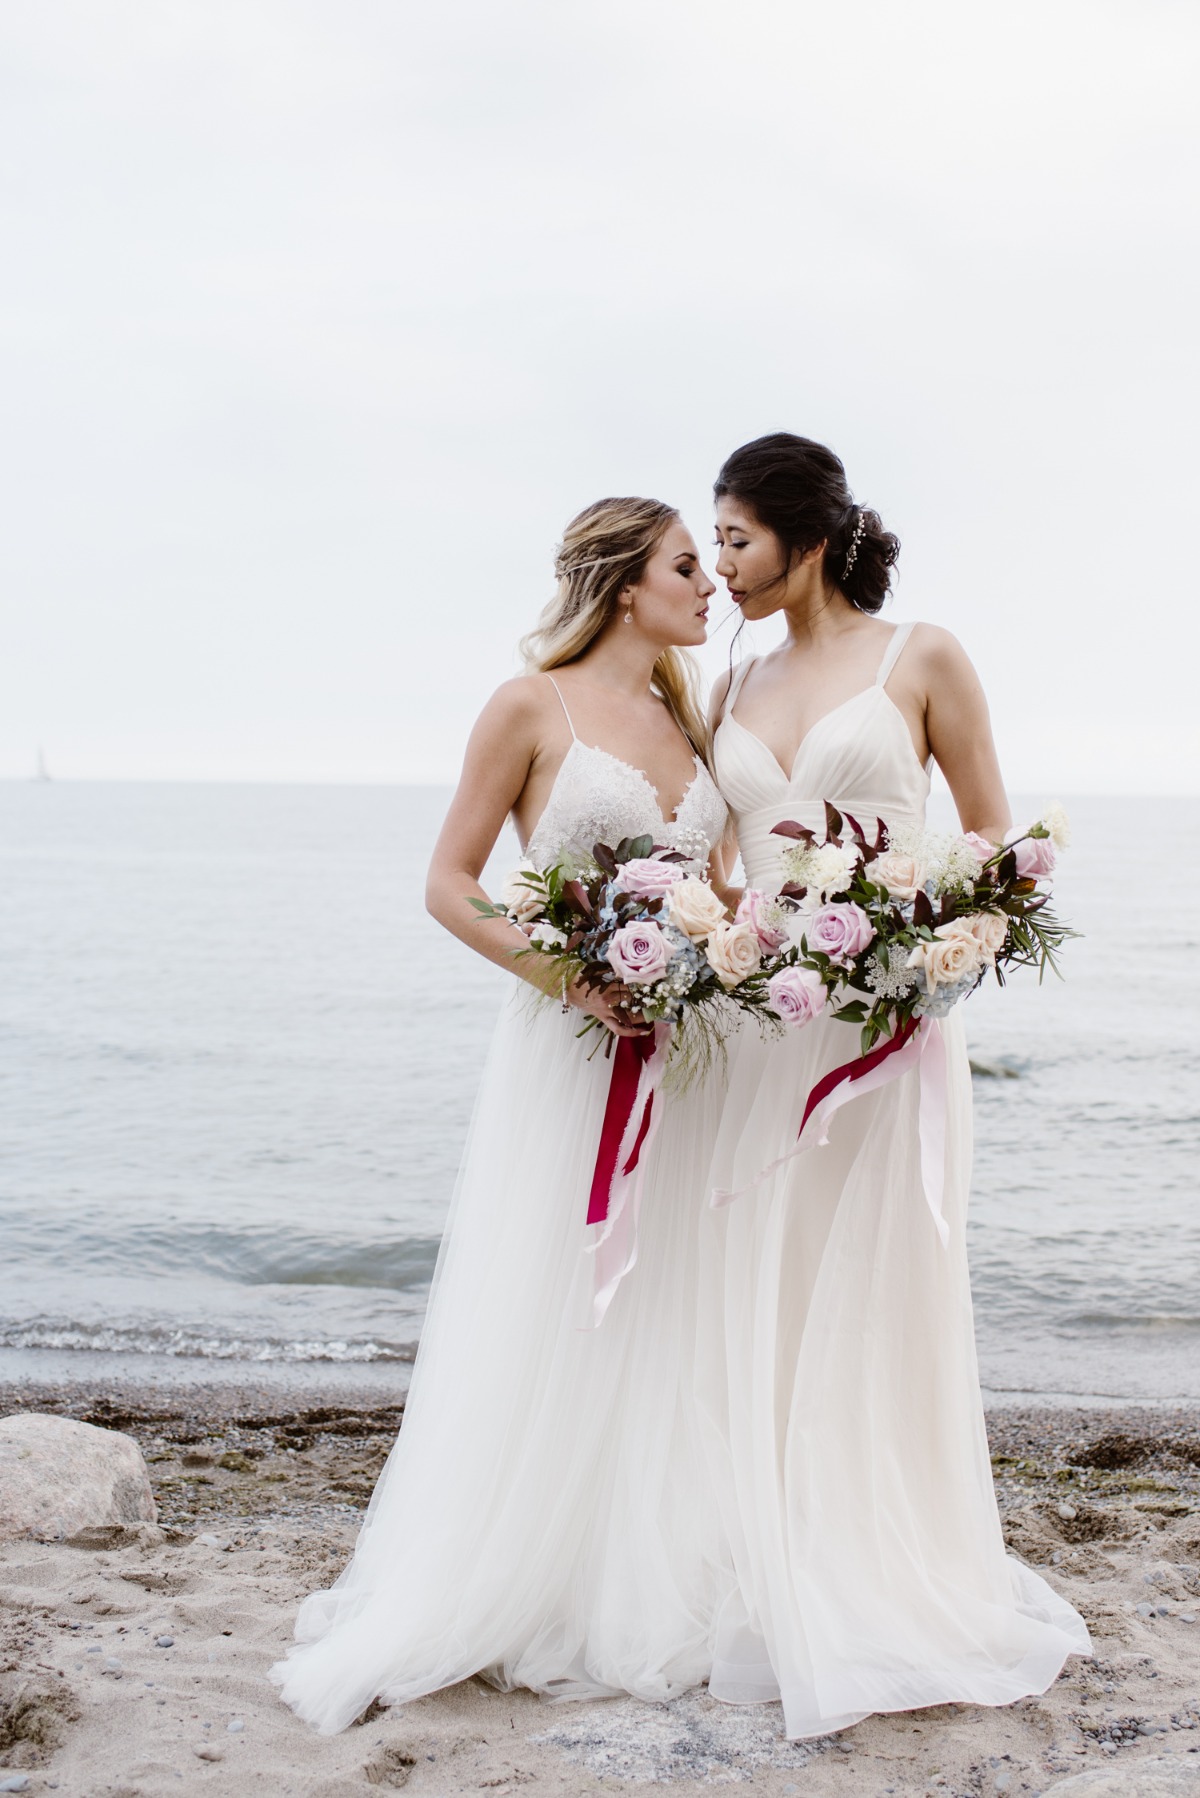 Lesbian beach wedding inspiration